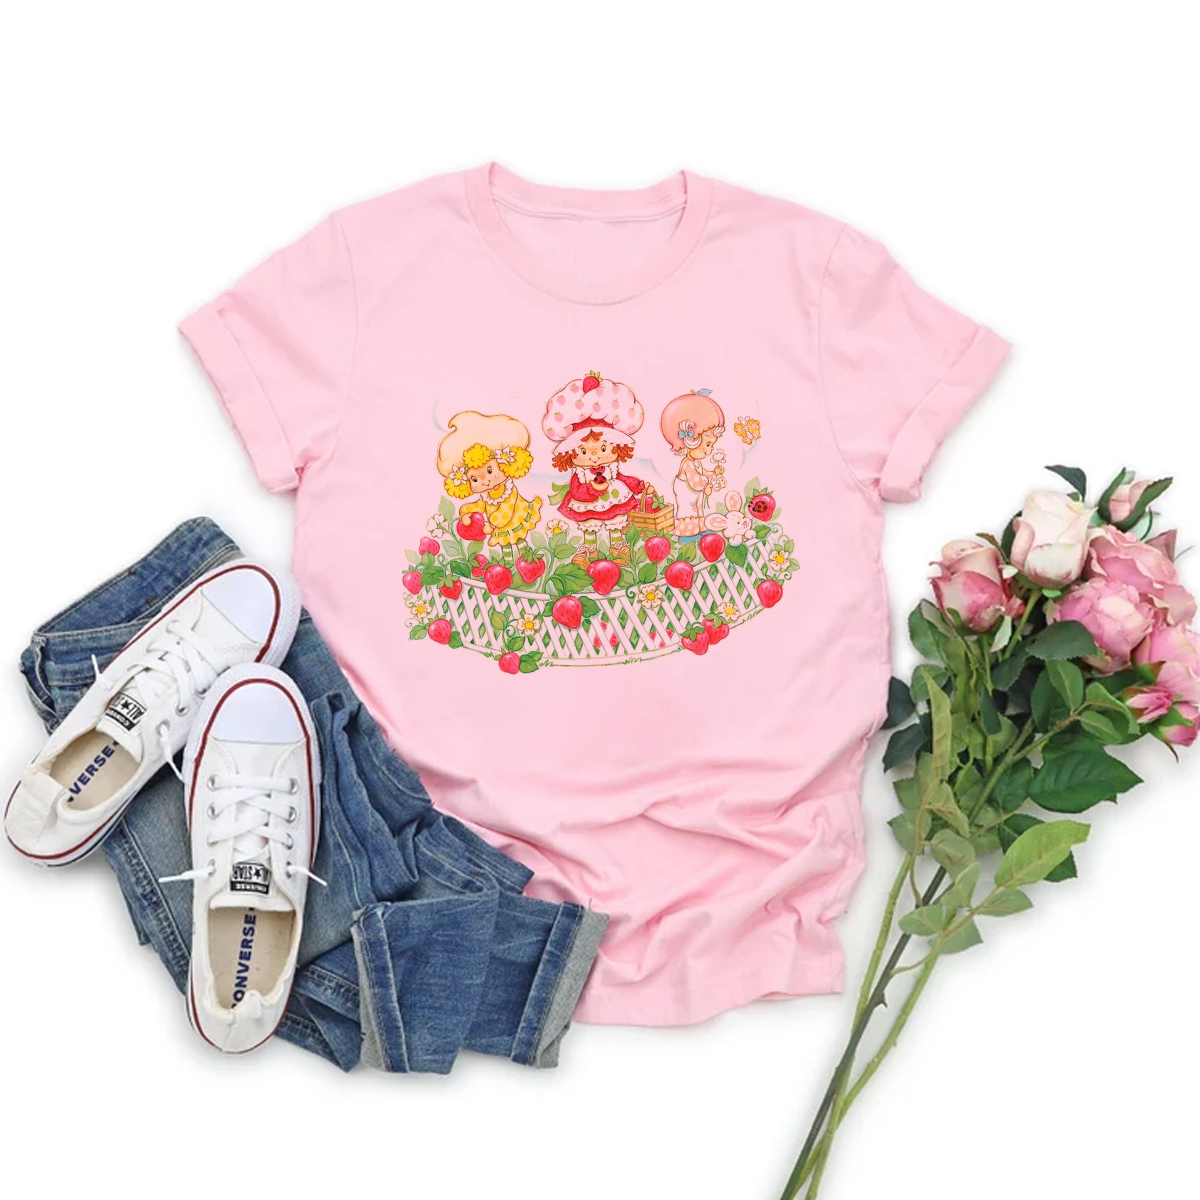 Personalized Vintage Strawberry Shortcake Shirt, Cartoon Friends Nostalgia Shirt, 80s Cartoon Friends Shirt Set, Care Bears And Strawberry TeeLemon Meringue, Apricot